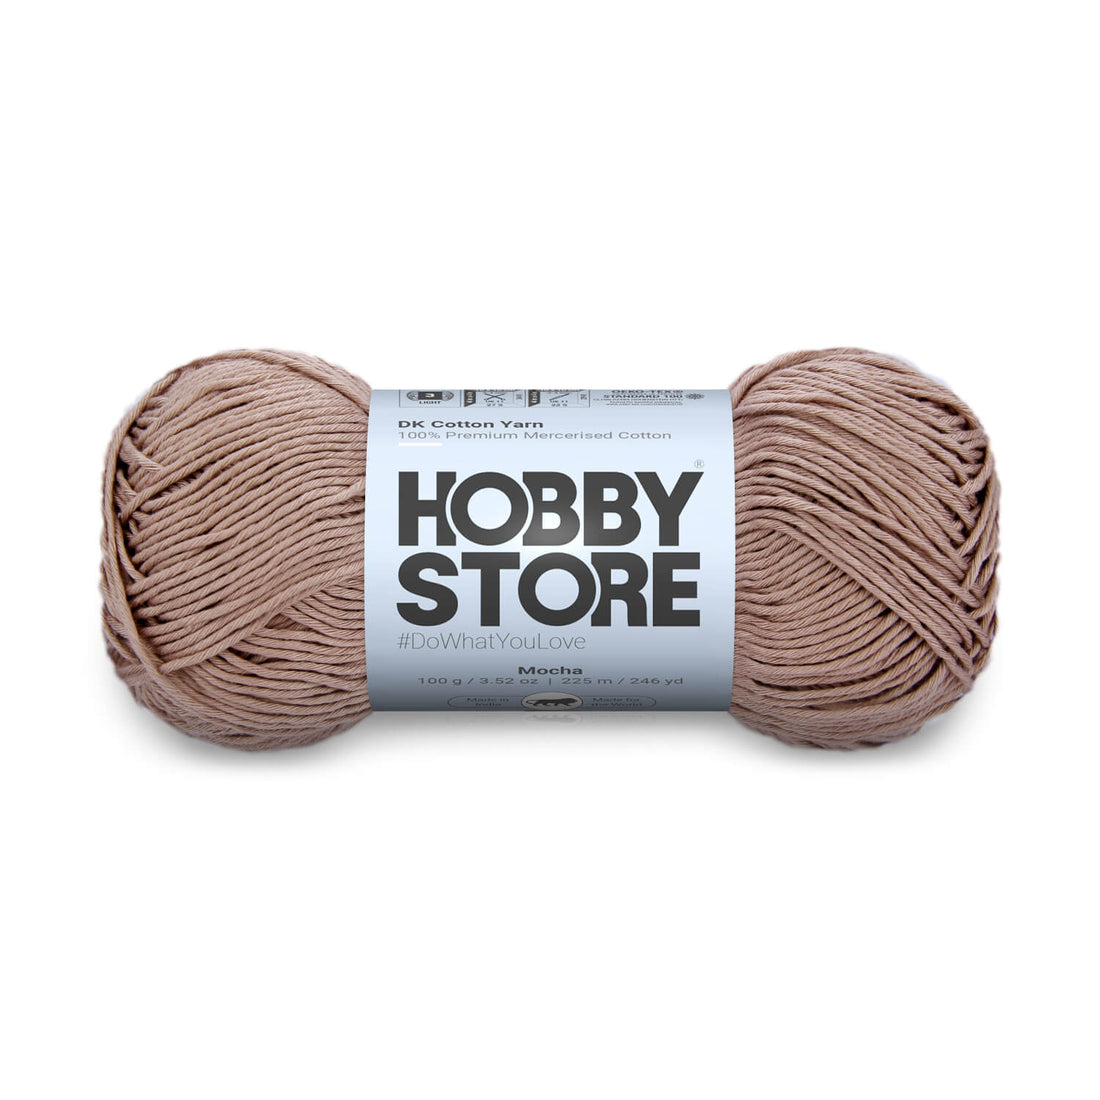 DK Mercerised Cotton Yarn by Hobby Store - Mocha - 331